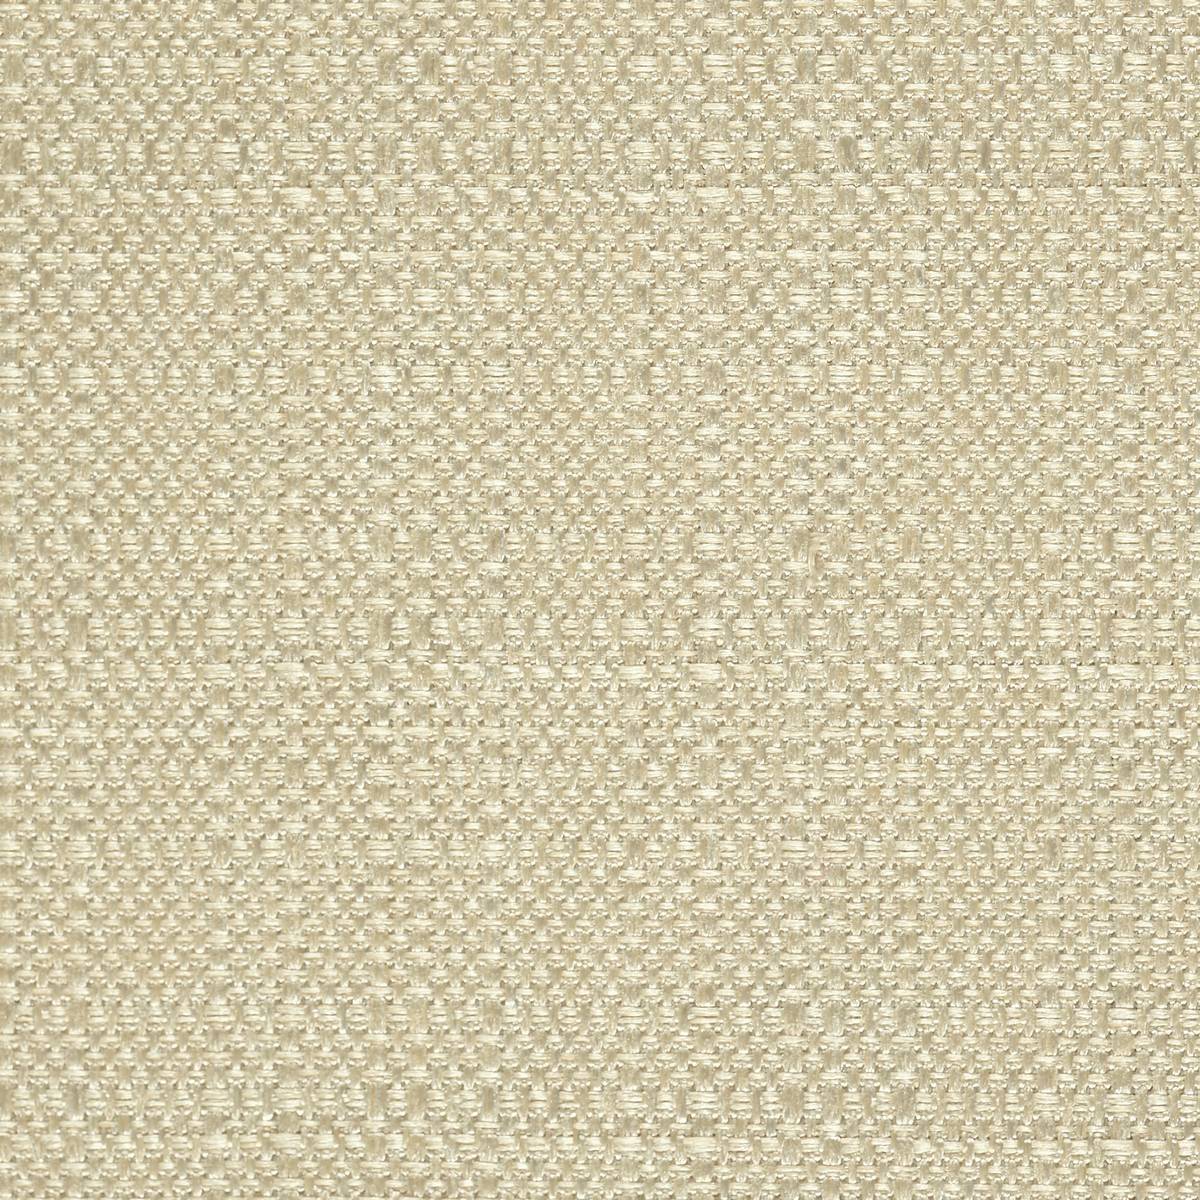 Ionic Sea Pearl Fabric by Harlequin